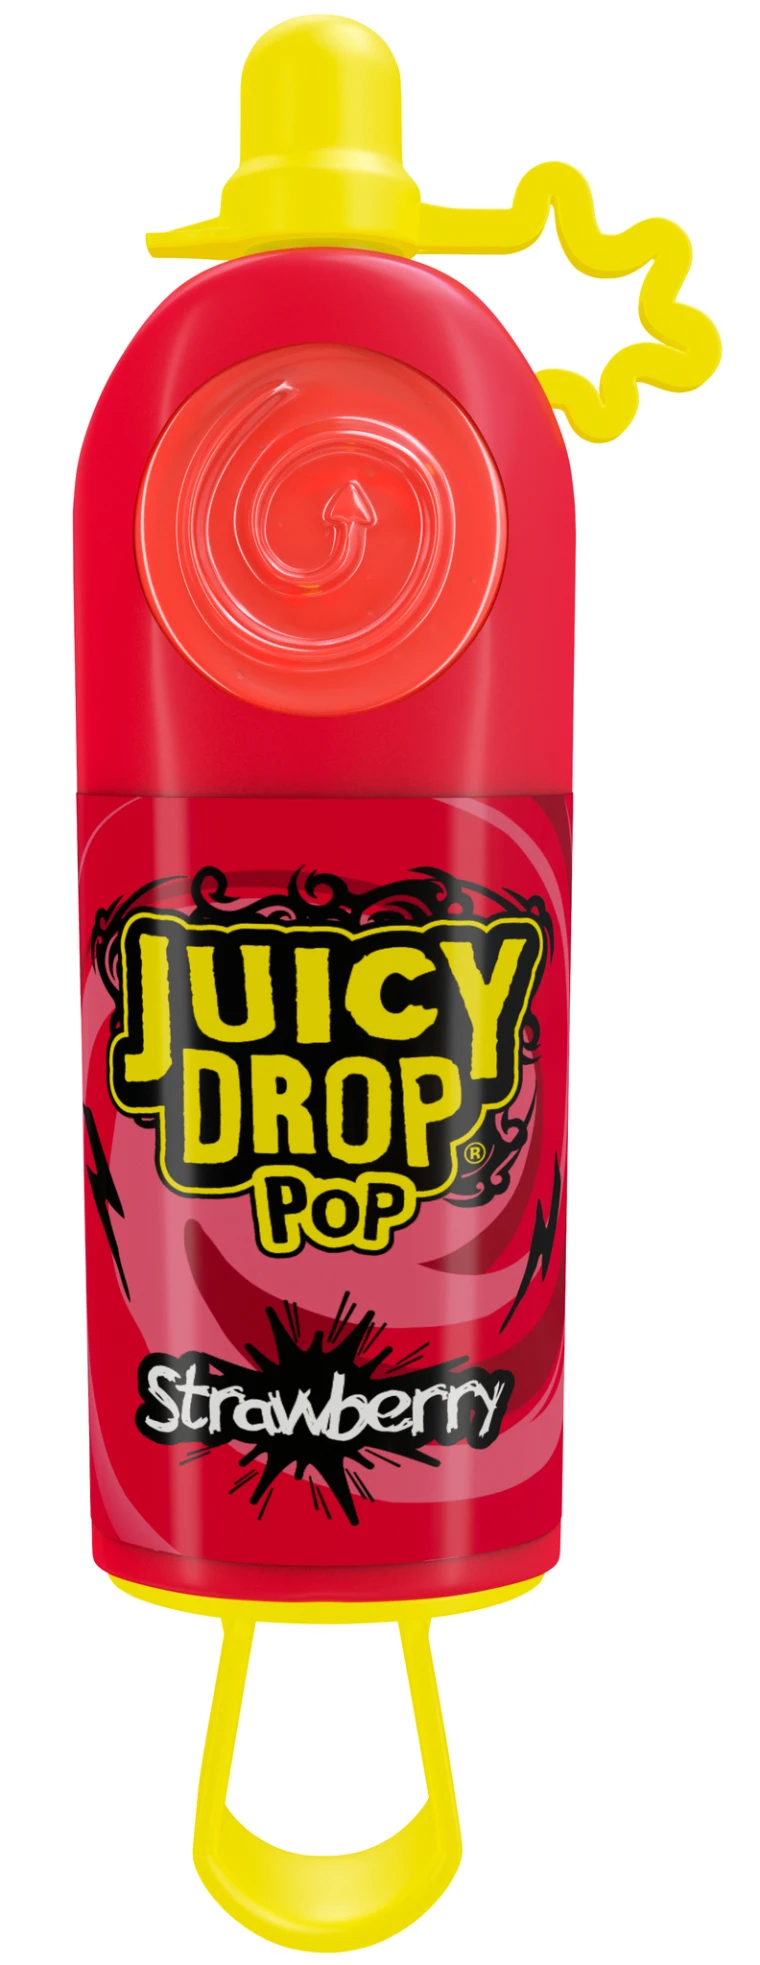 Juicy Drop Pop vertical